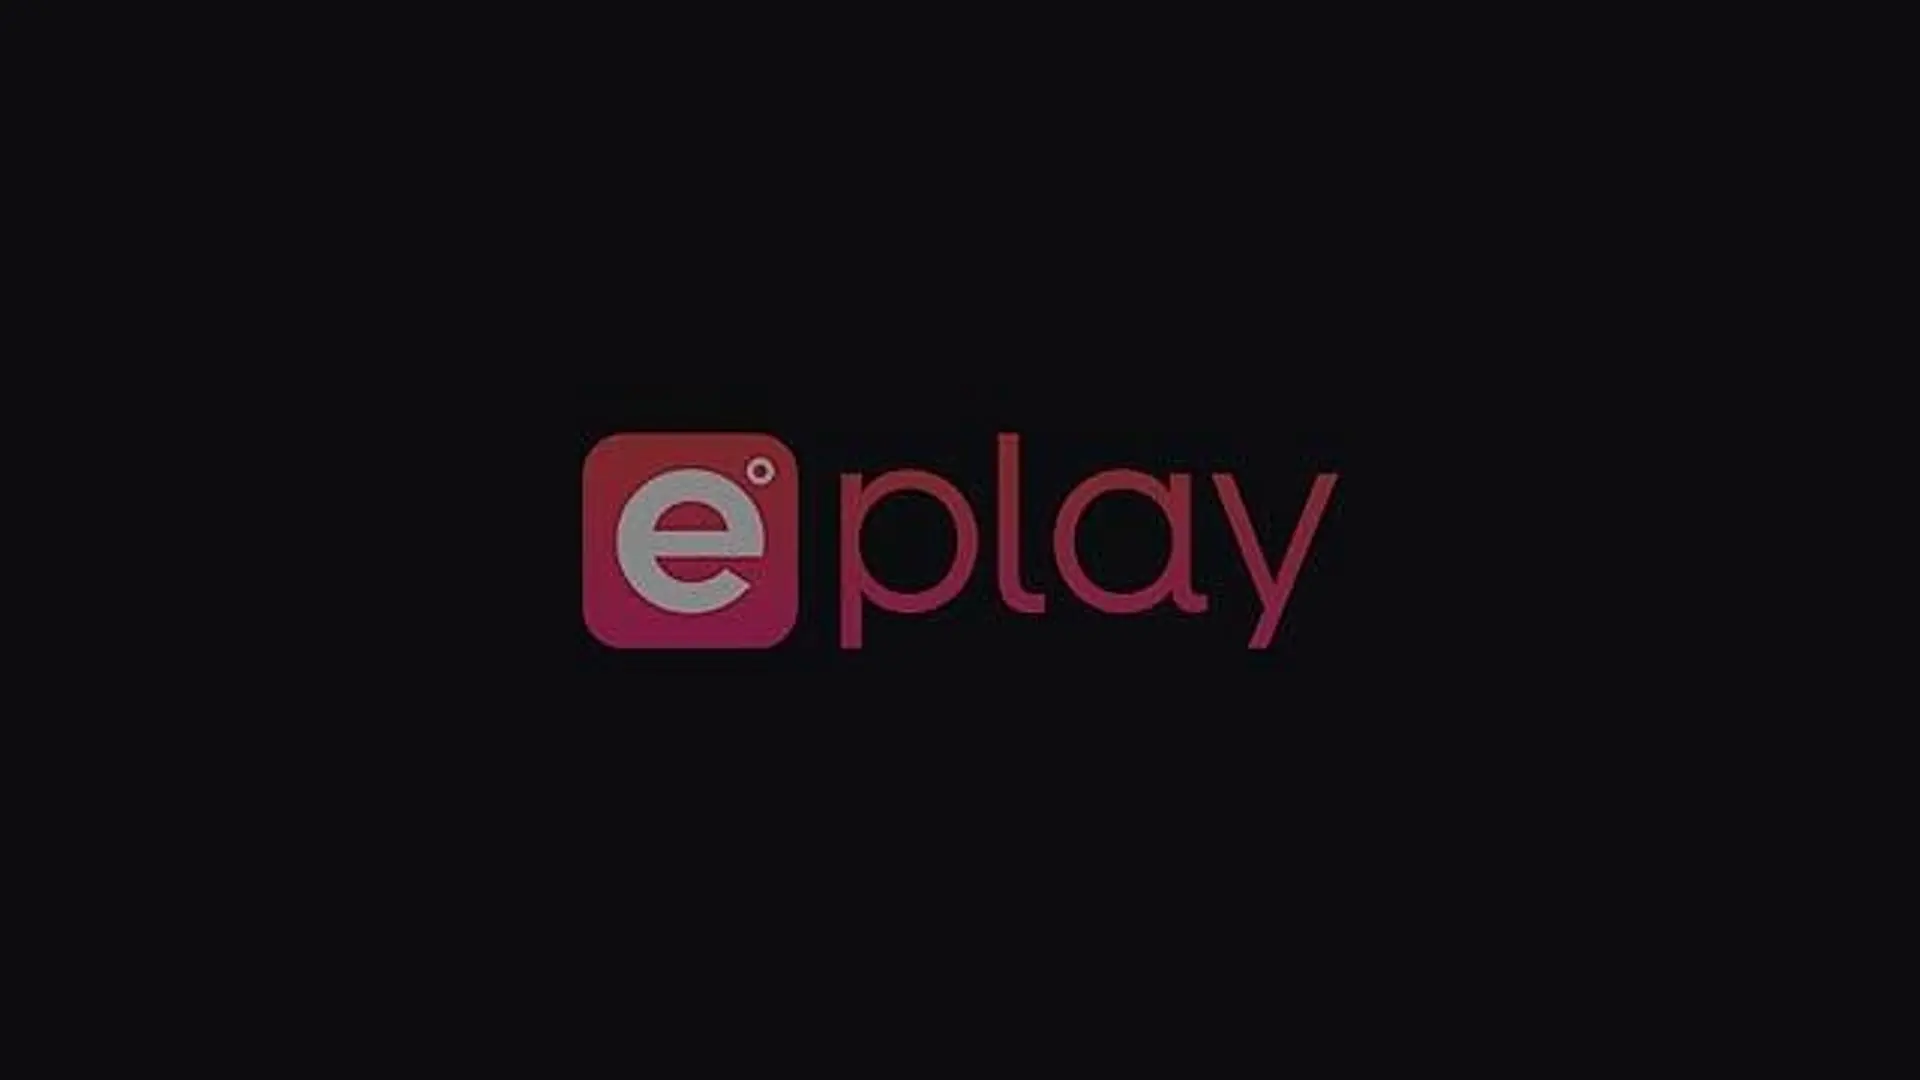 KaroKaroline's ePlay Channel